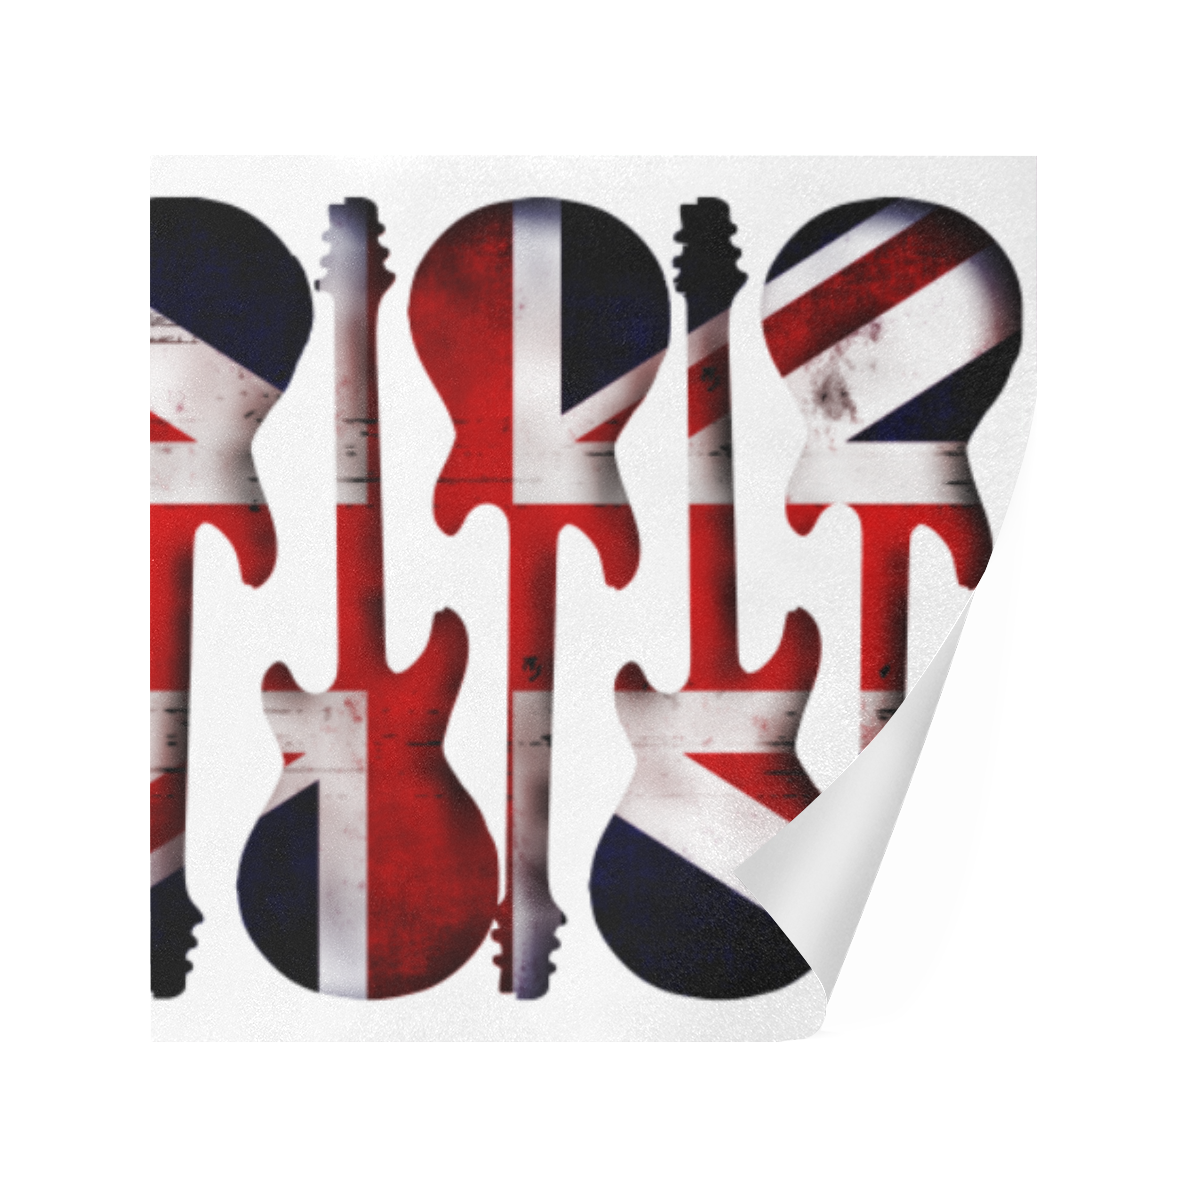 Large British Flag UK Flag Guitars Decorating Gift Wrapping Paper 58"x 23" (3 Rolls)